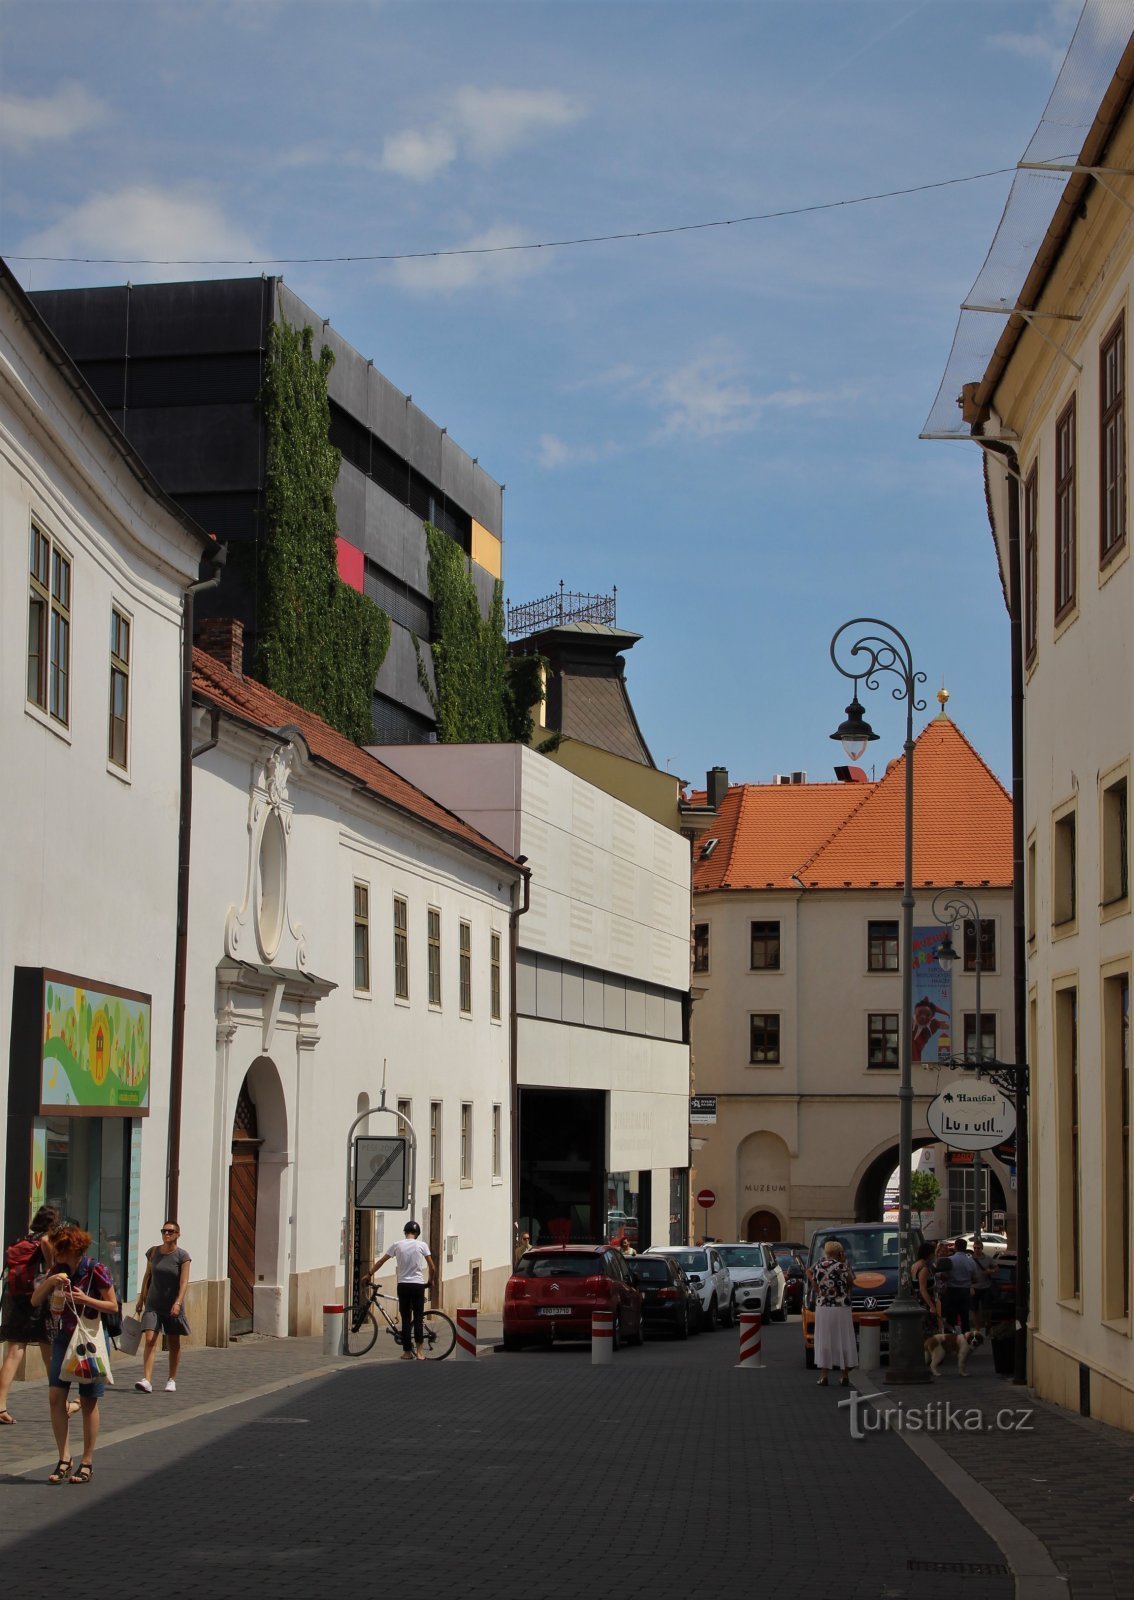 Im Hintergrund die Orlí-Straße mit dem Menínská-Tor